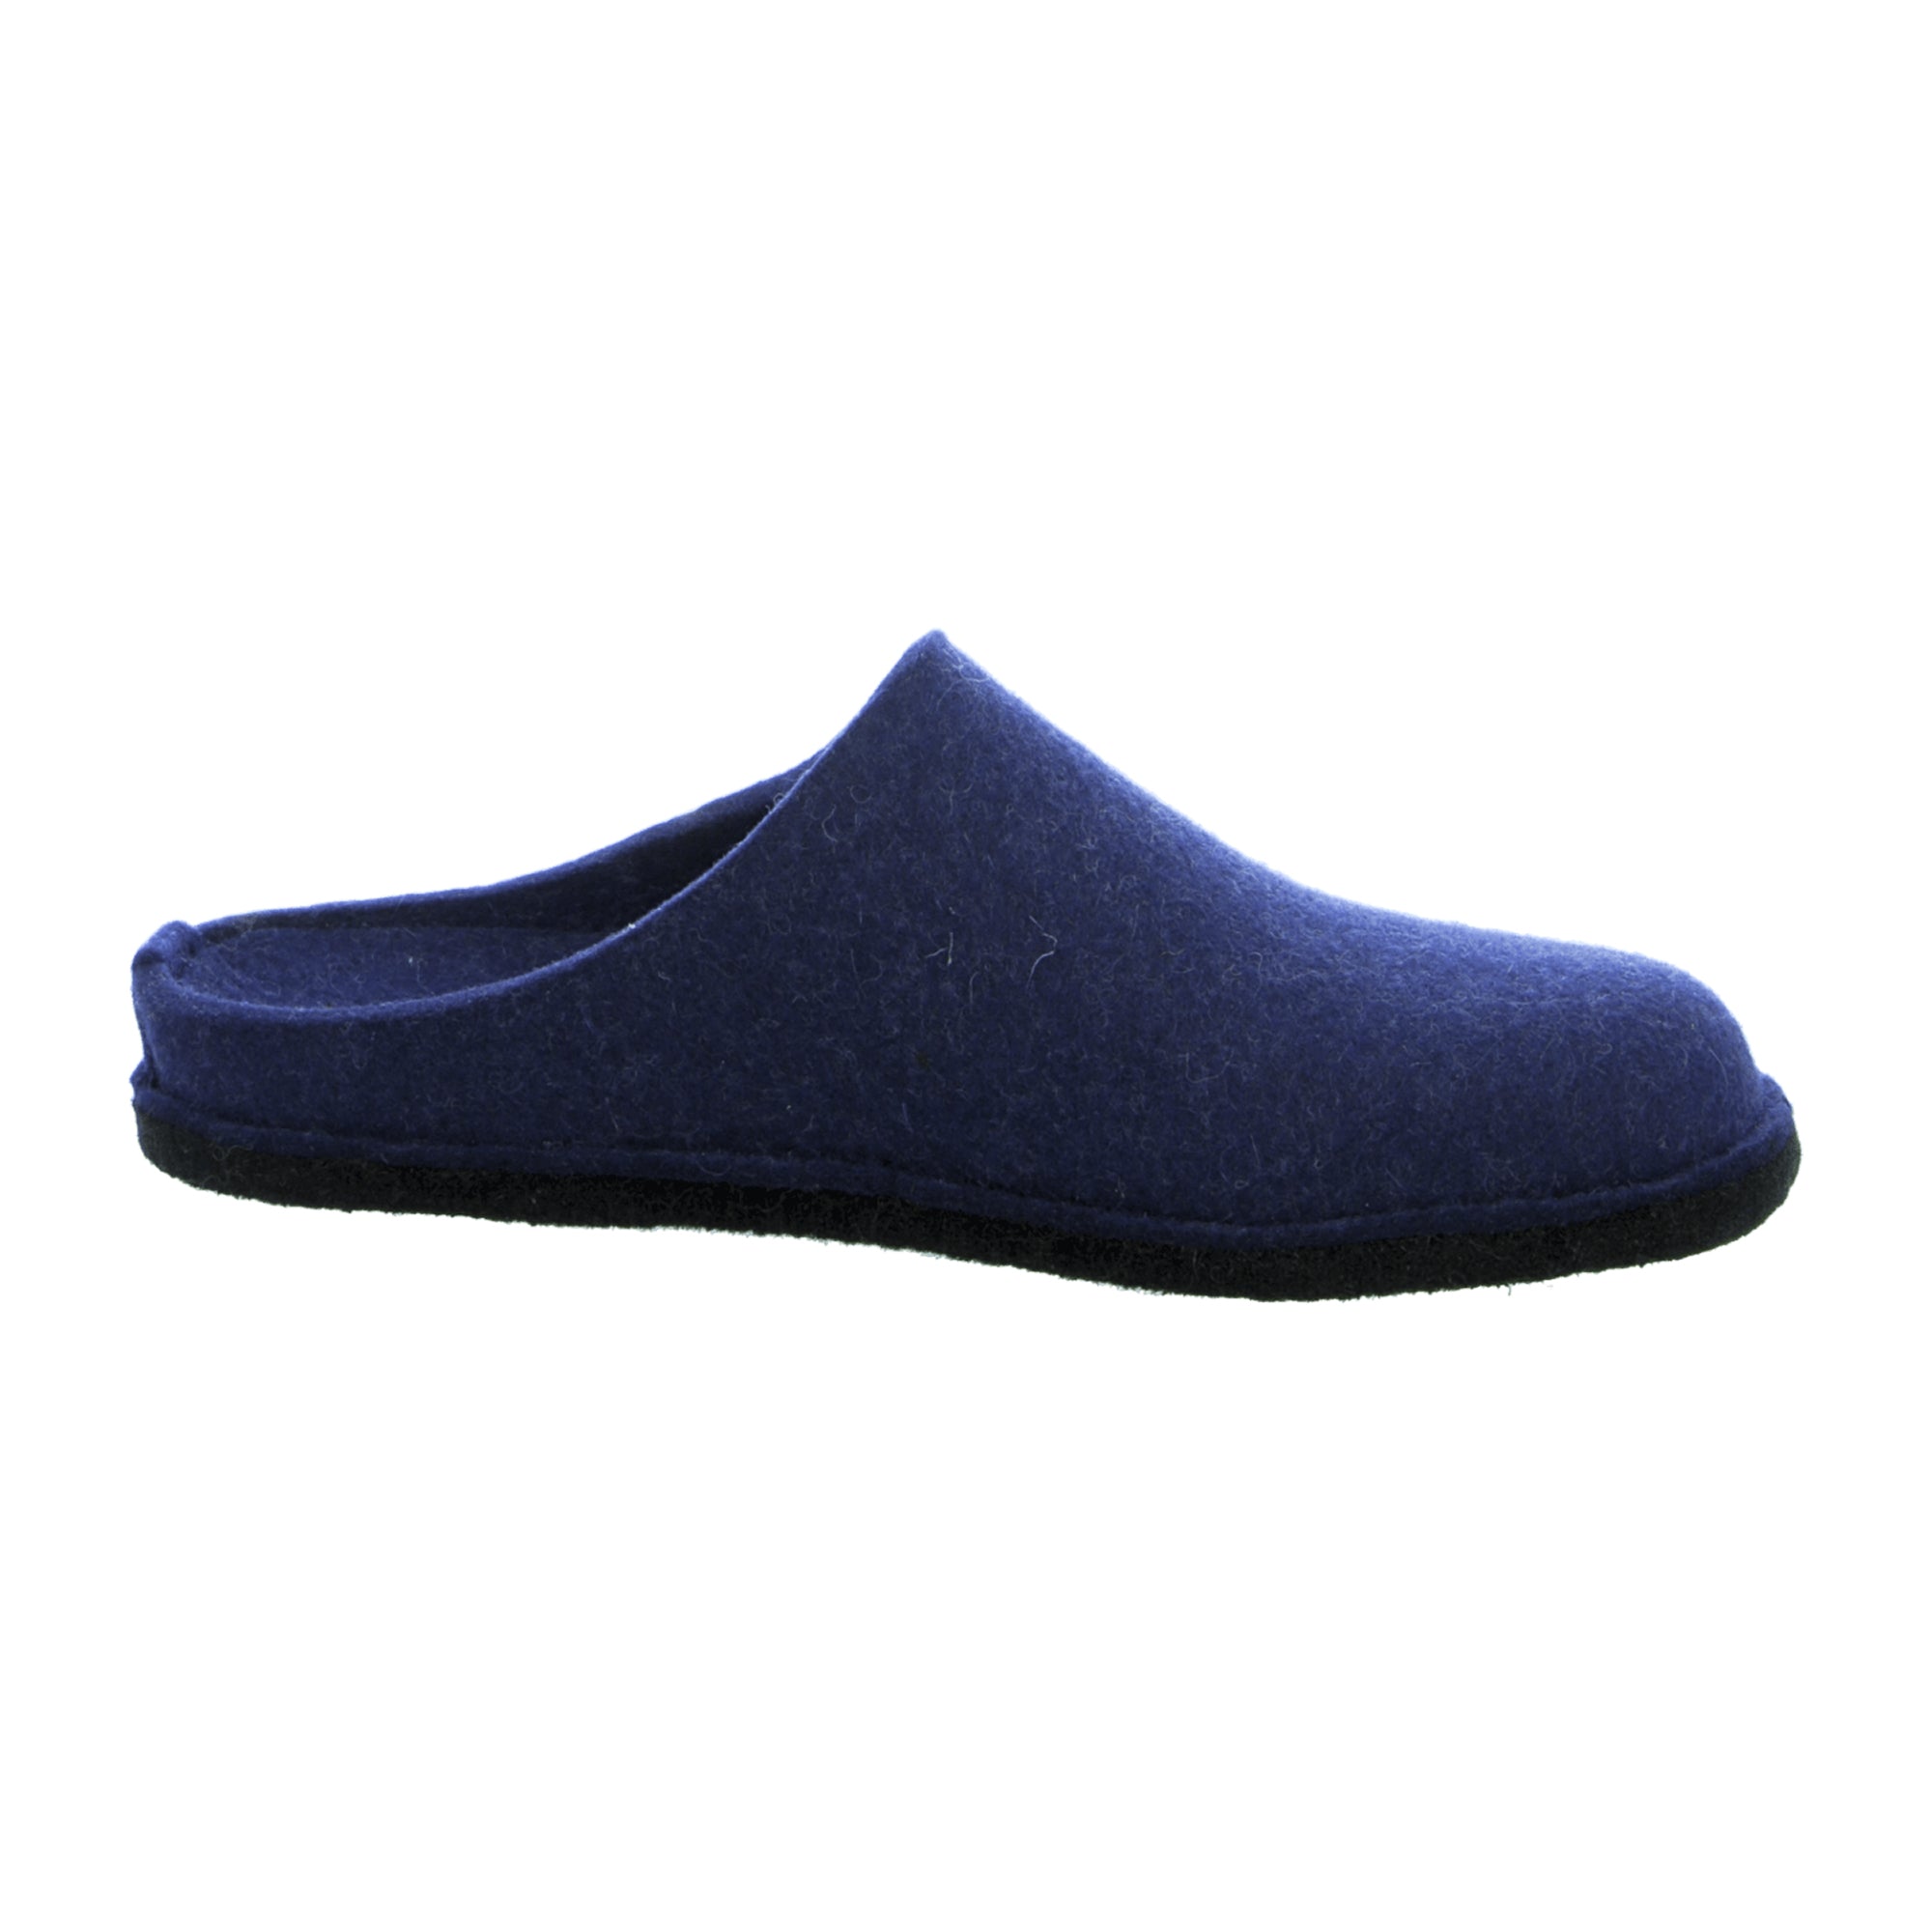 Haflinger Flair Soft Men's Slippers, Soft Wool, Durable - Blue